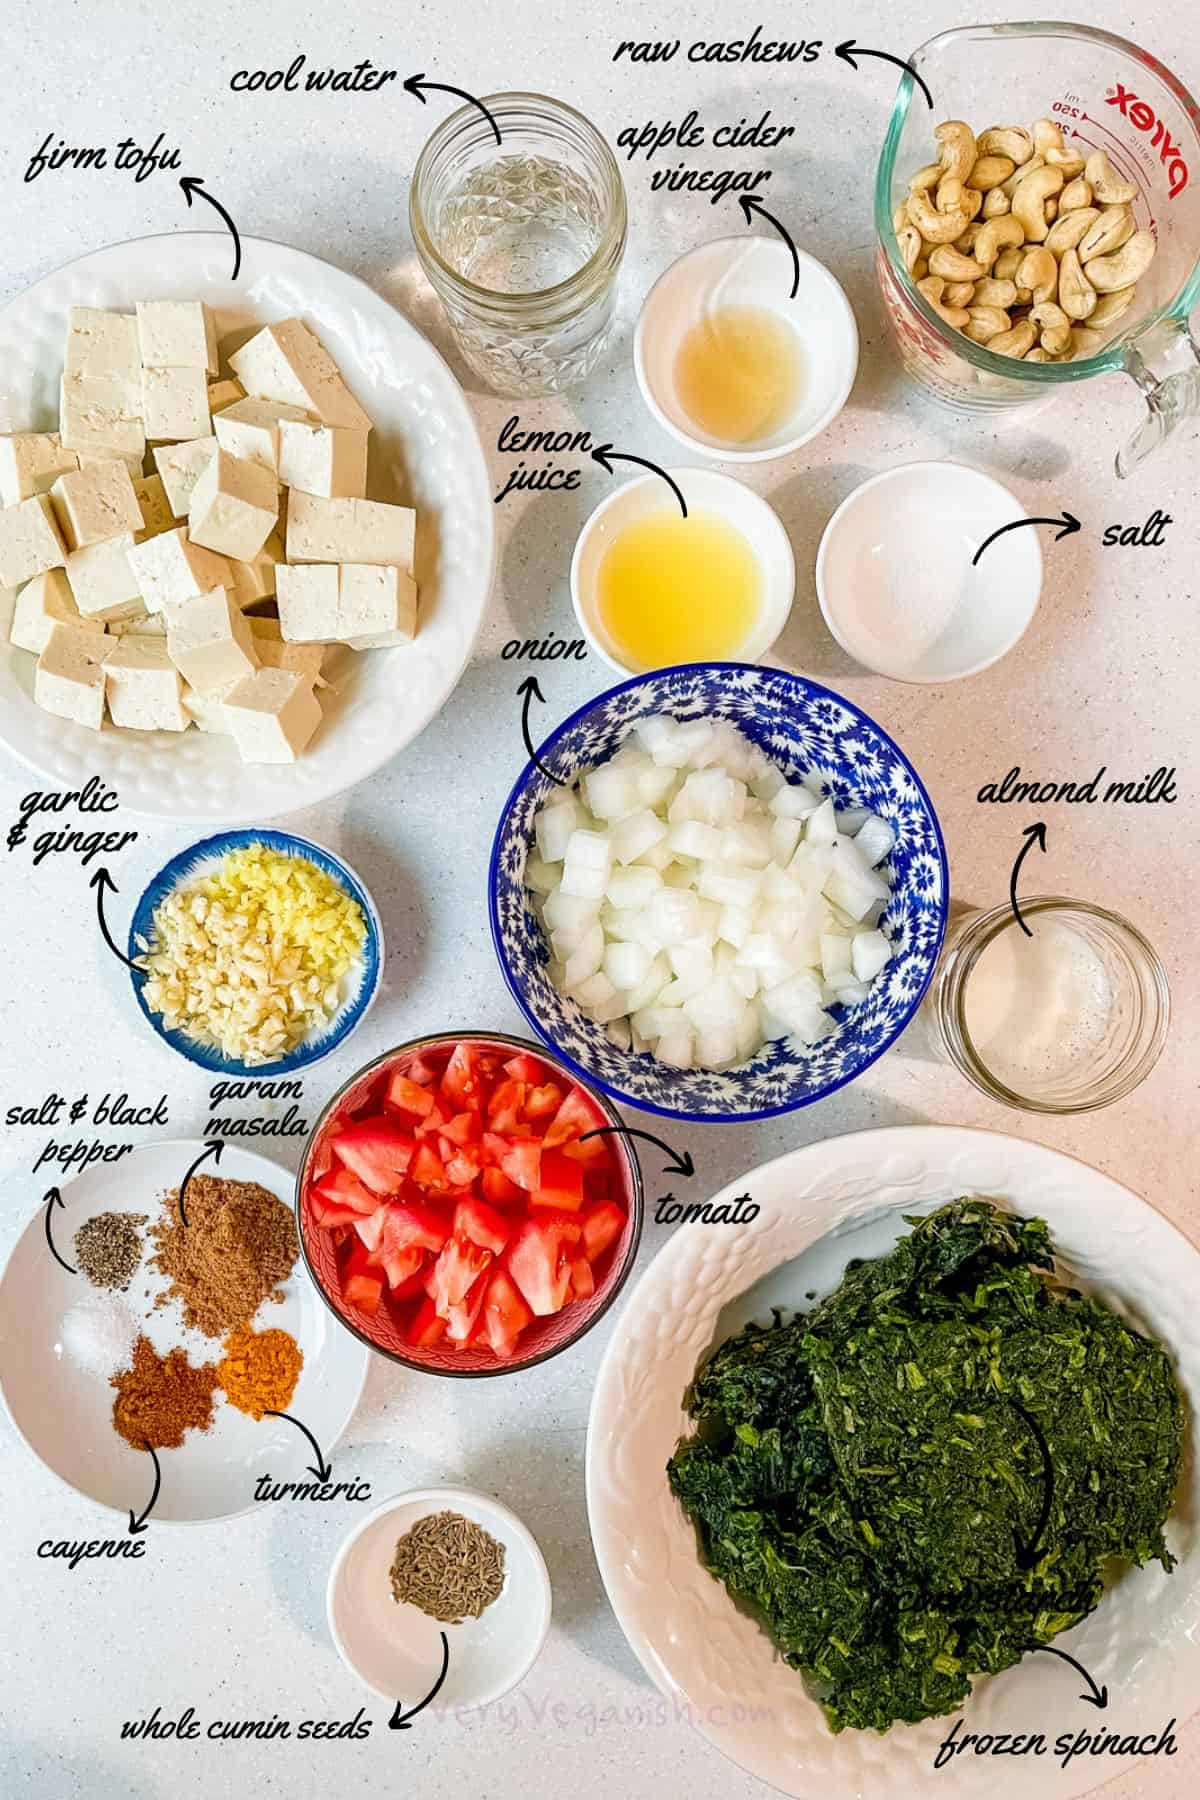 ingredients for vegan saag palak paneer with tofu: tofu, spinach, onion, tomato, garlic, ginger, cashew sour cream, garam masala, turmeric, cayenne, whole cumin seeds, salt and pepper